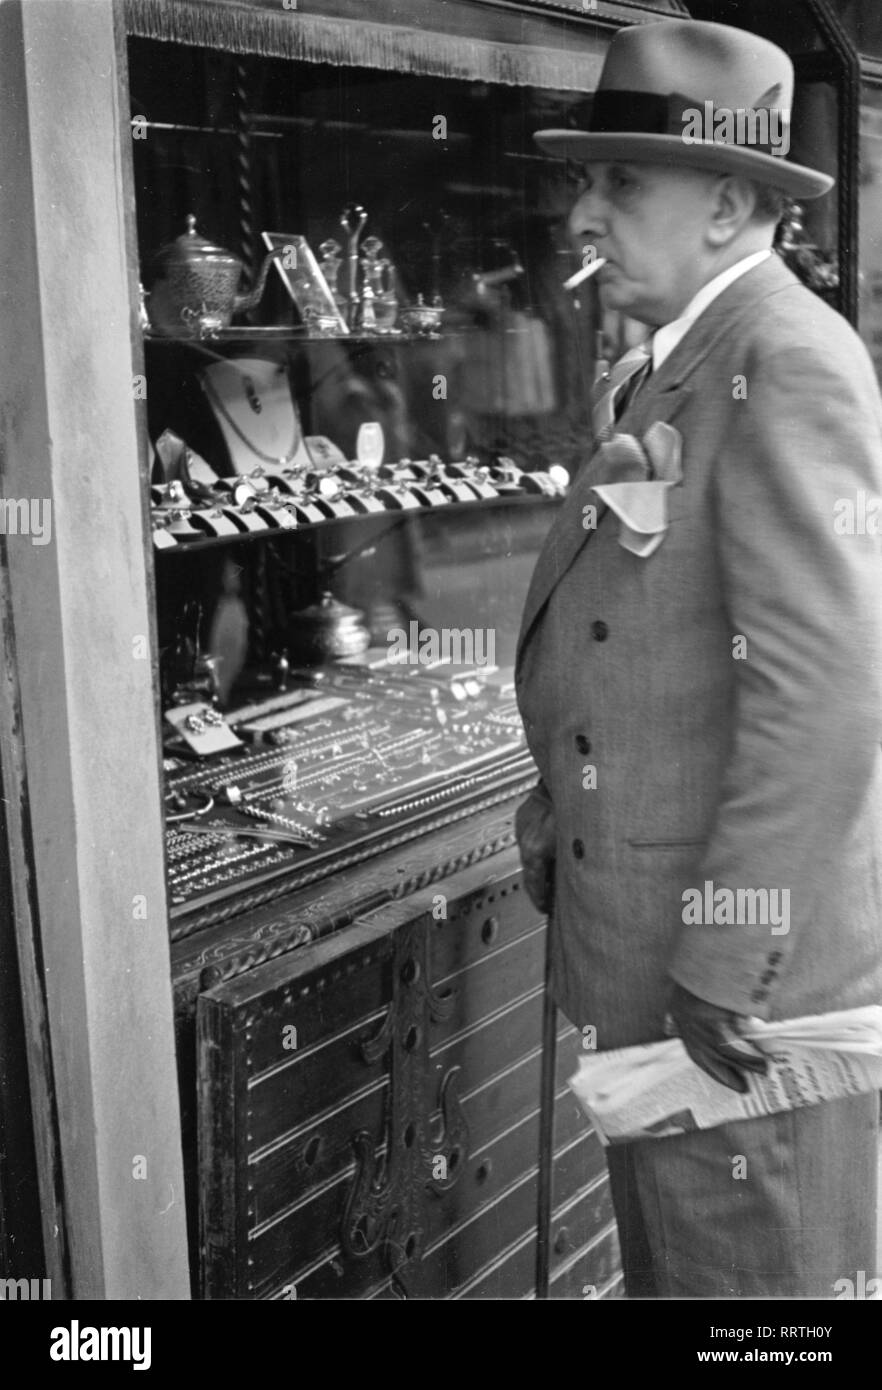 Travel to Florence - Italy in 1950s - Gentleman from Florence  looking into a shop window. Image date 1954. Älterer Herr schaut sich die Auslage in einem Schaufenster in Florenz an, Italien. Photo Erich Andres Stock Photo